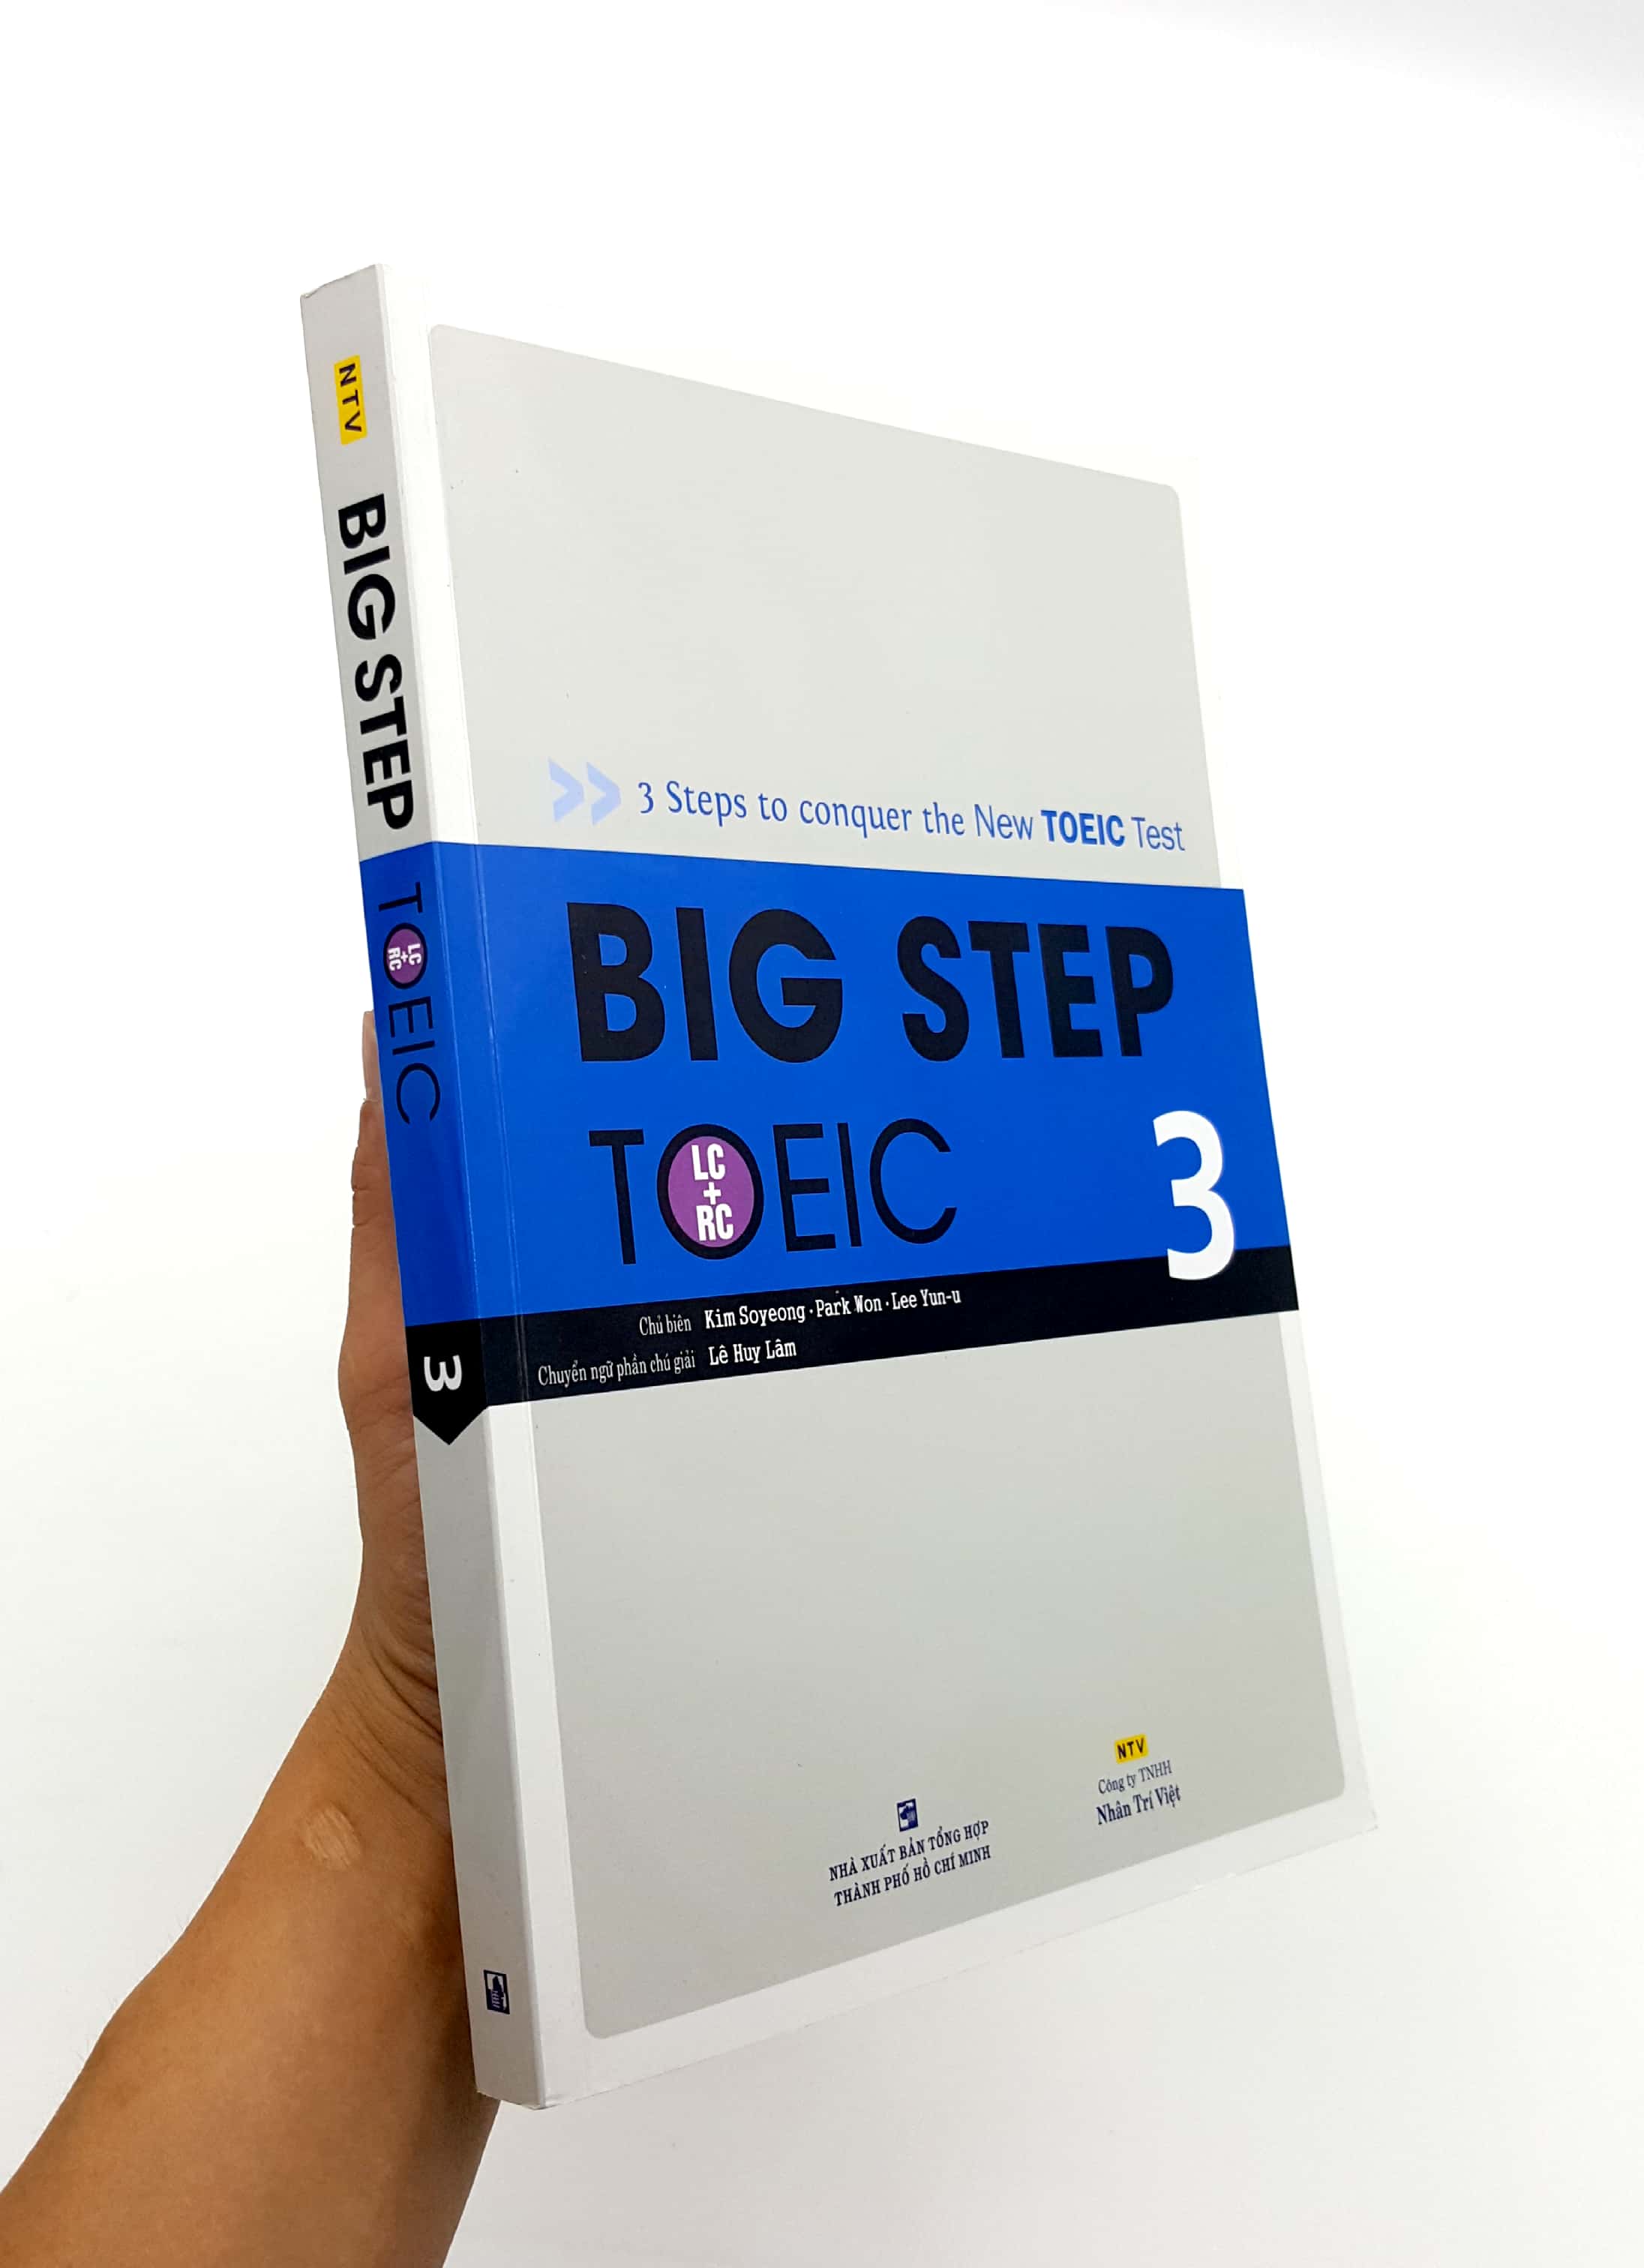 Big Step TOEIC 3 LC RC PDF